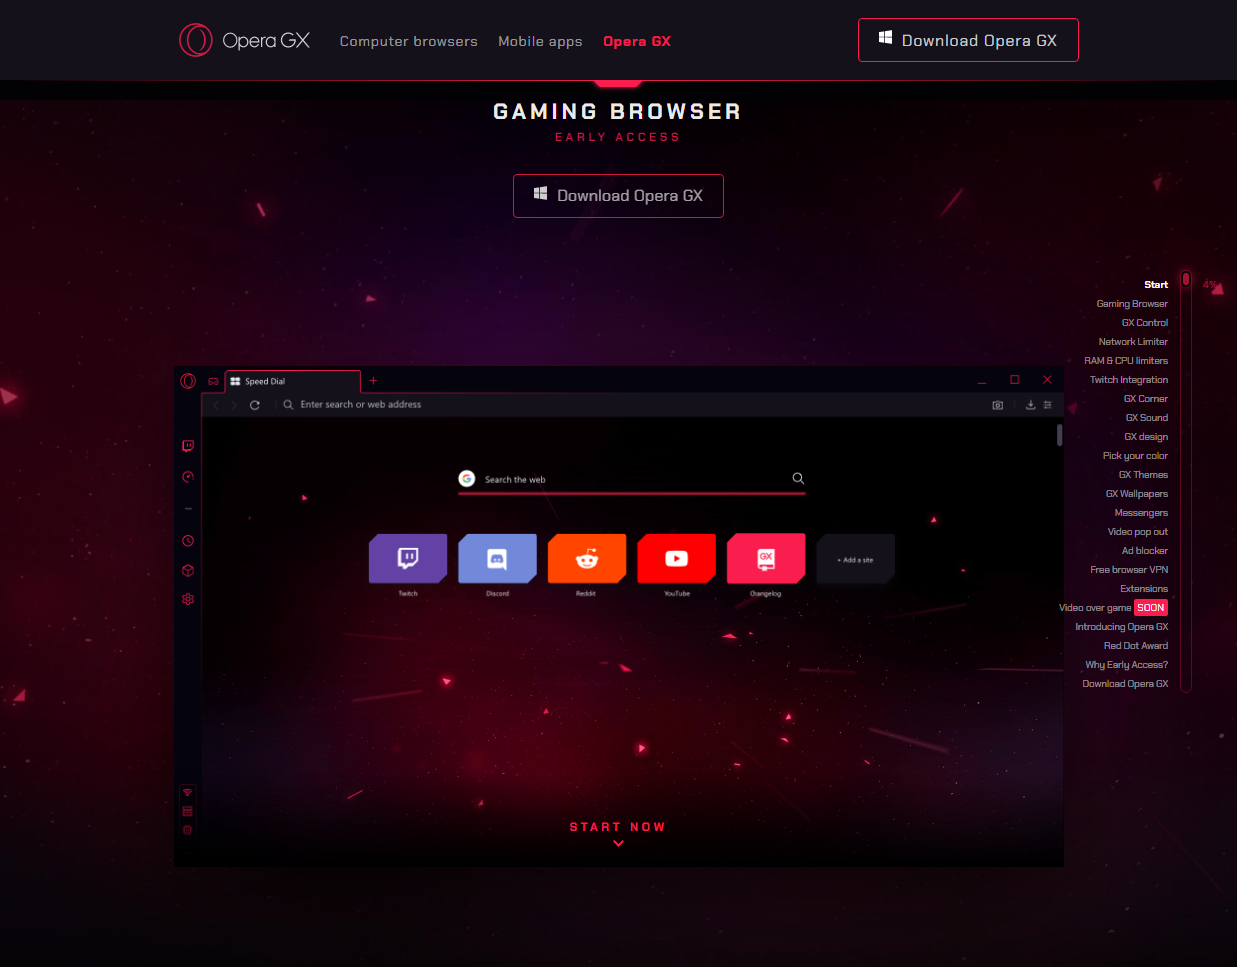 Opera GX: The Gamer's Browser